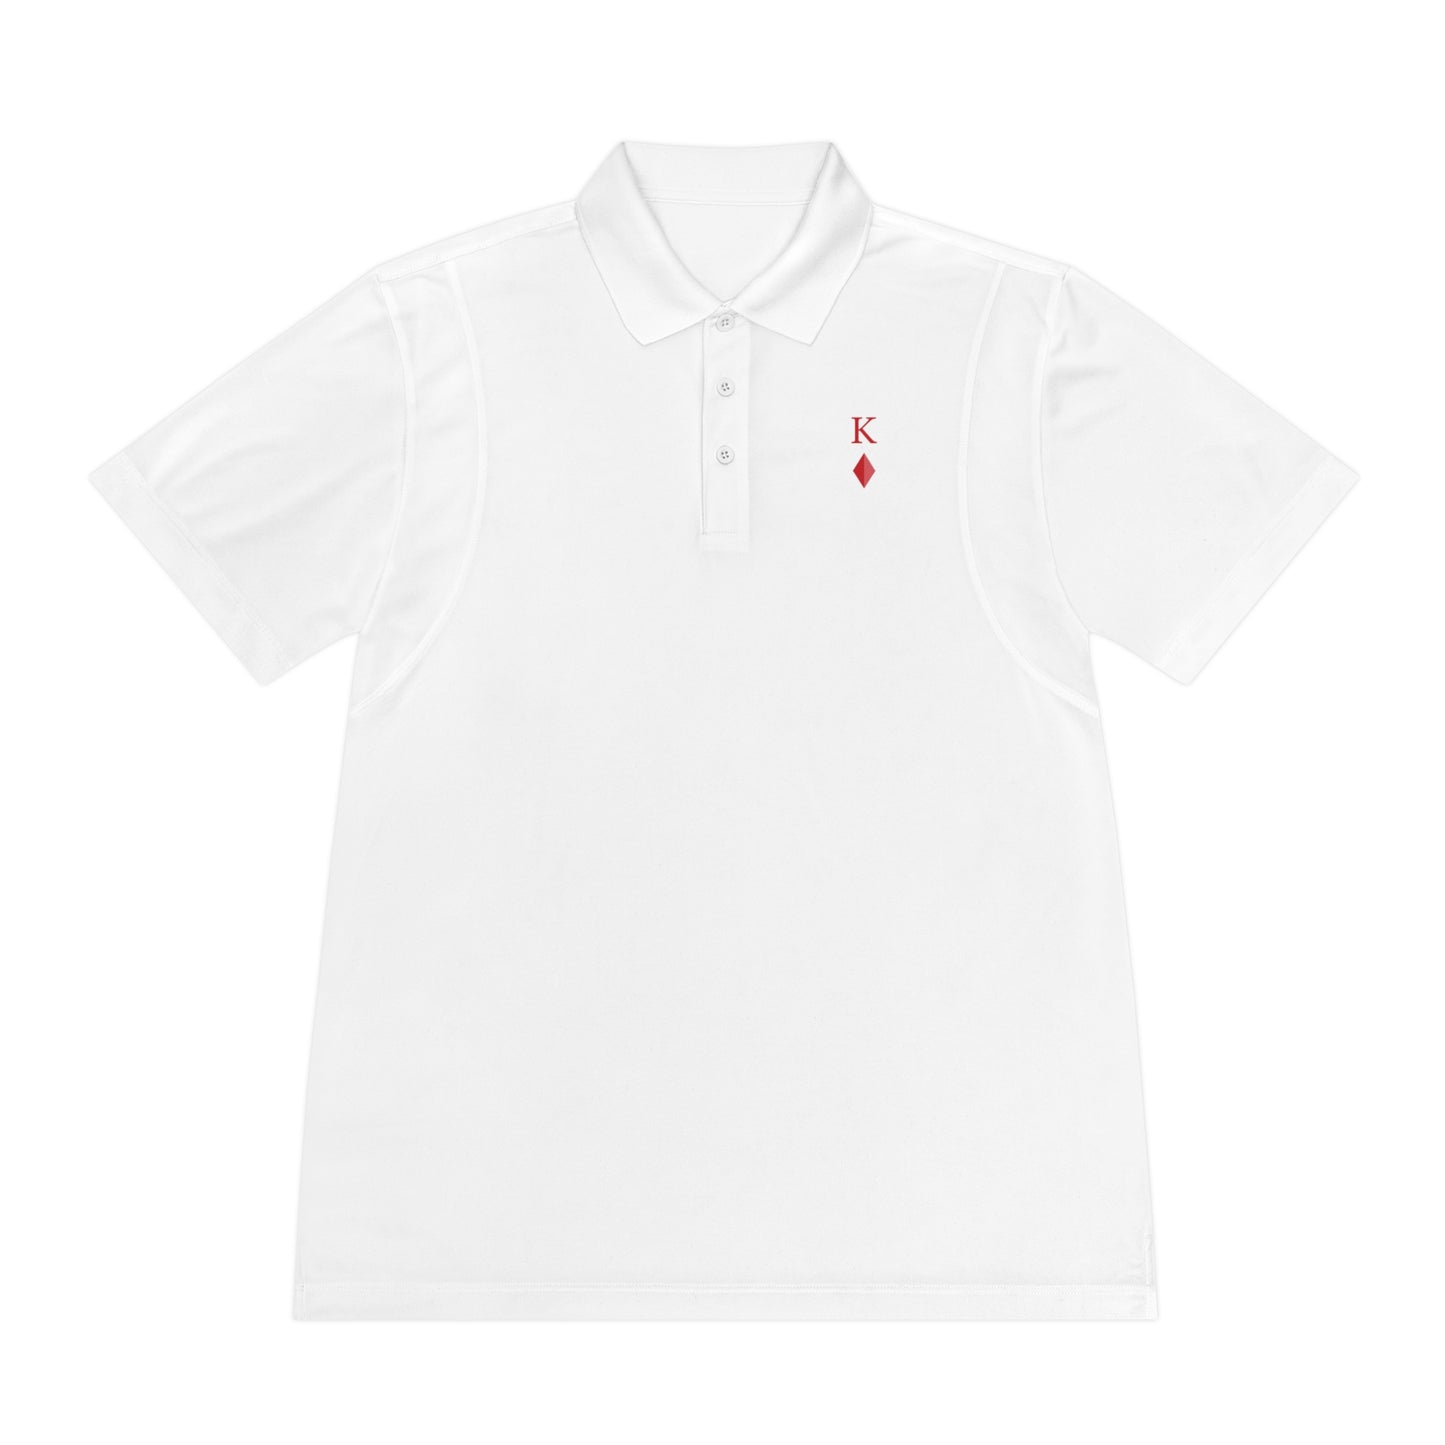 Copy of Men's Sport Polo Shirt